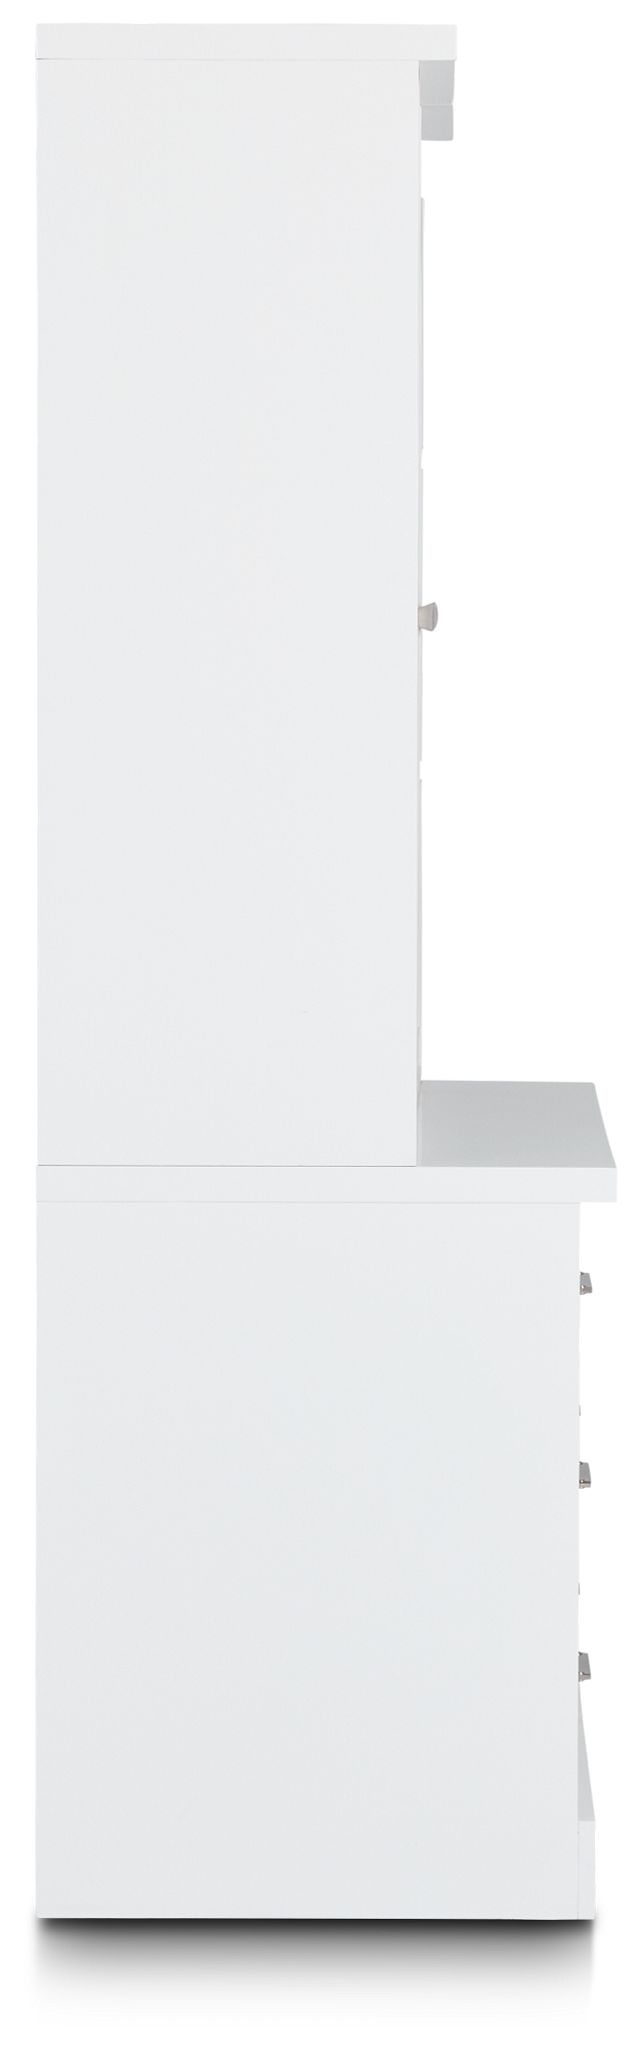 Newport White Drawer Bookcase